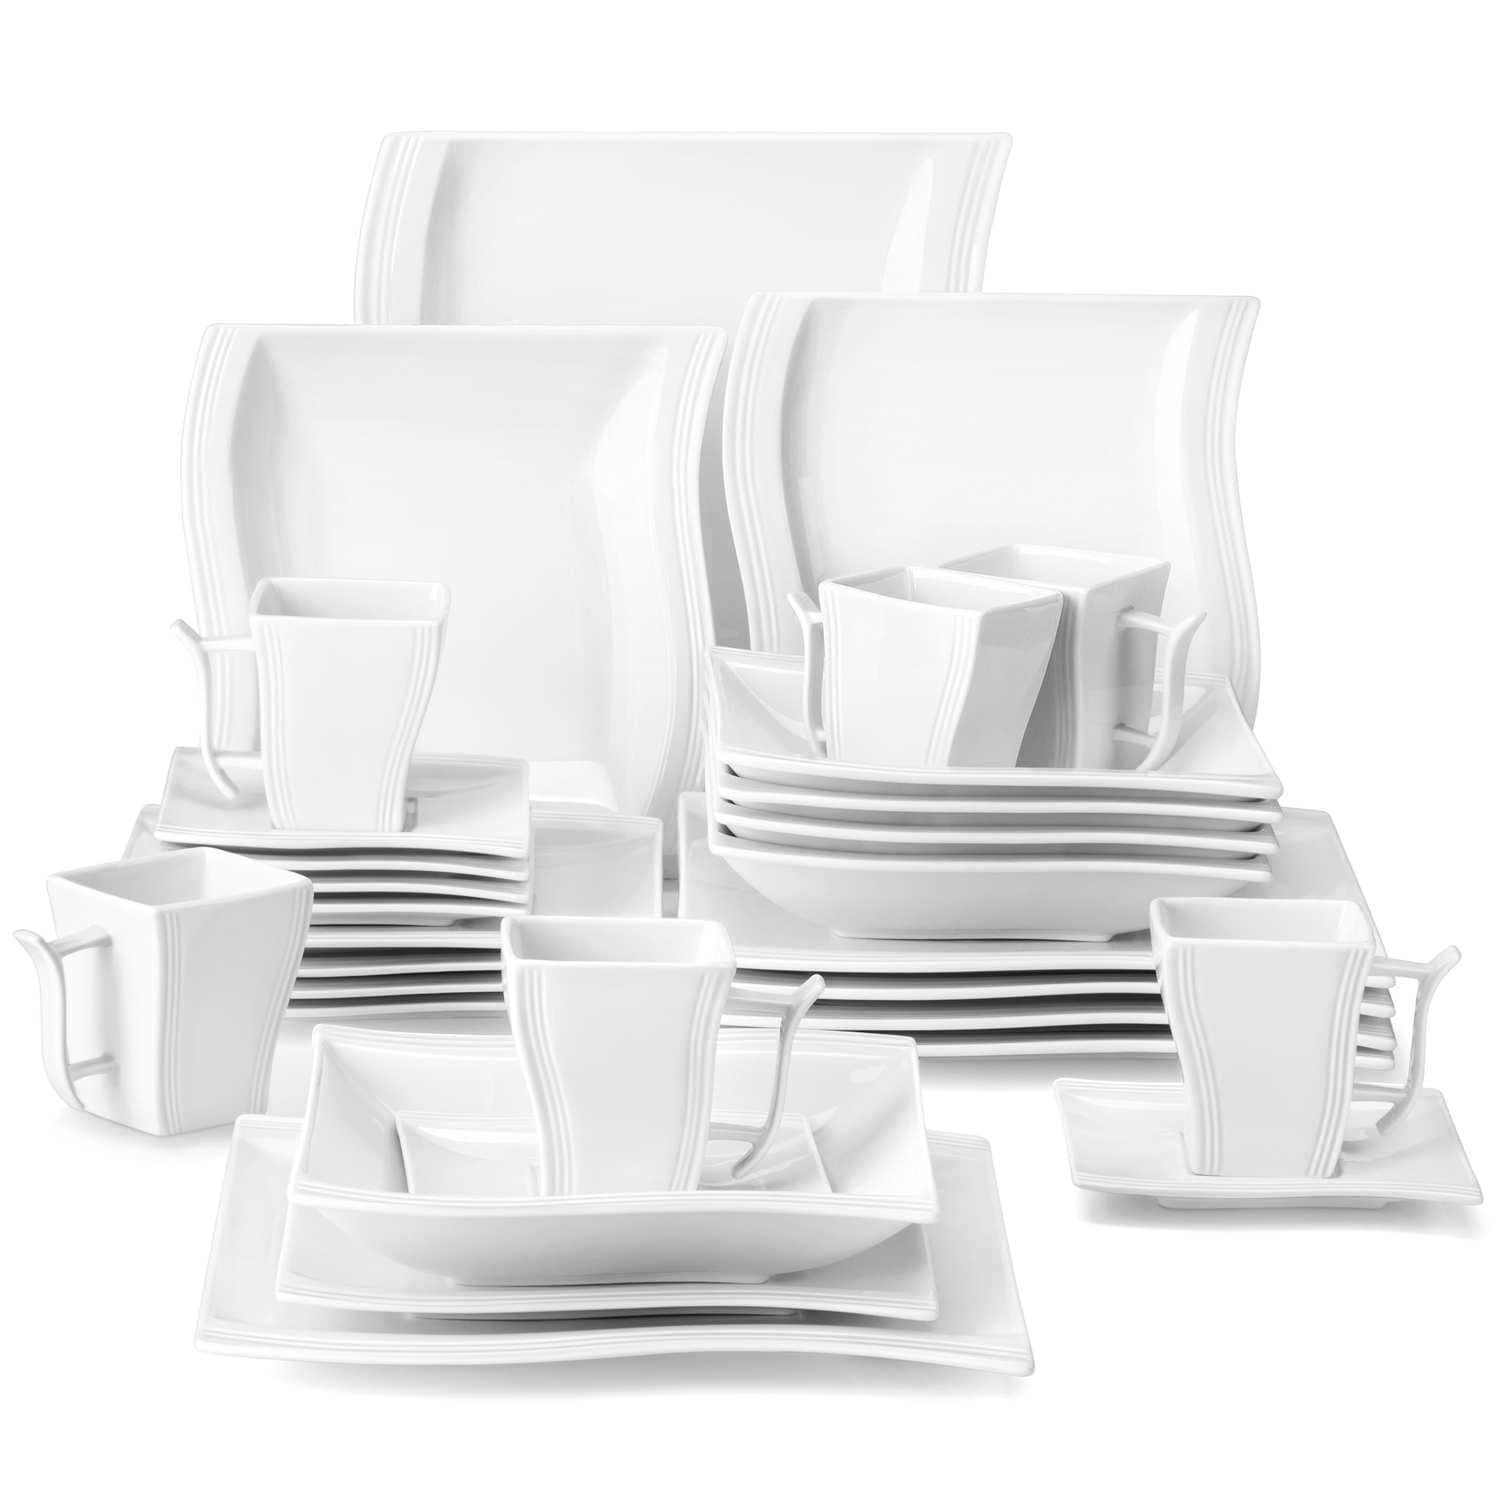 MALACASA Julia 6-Piece White Square Porcelain Dinner Plate Set